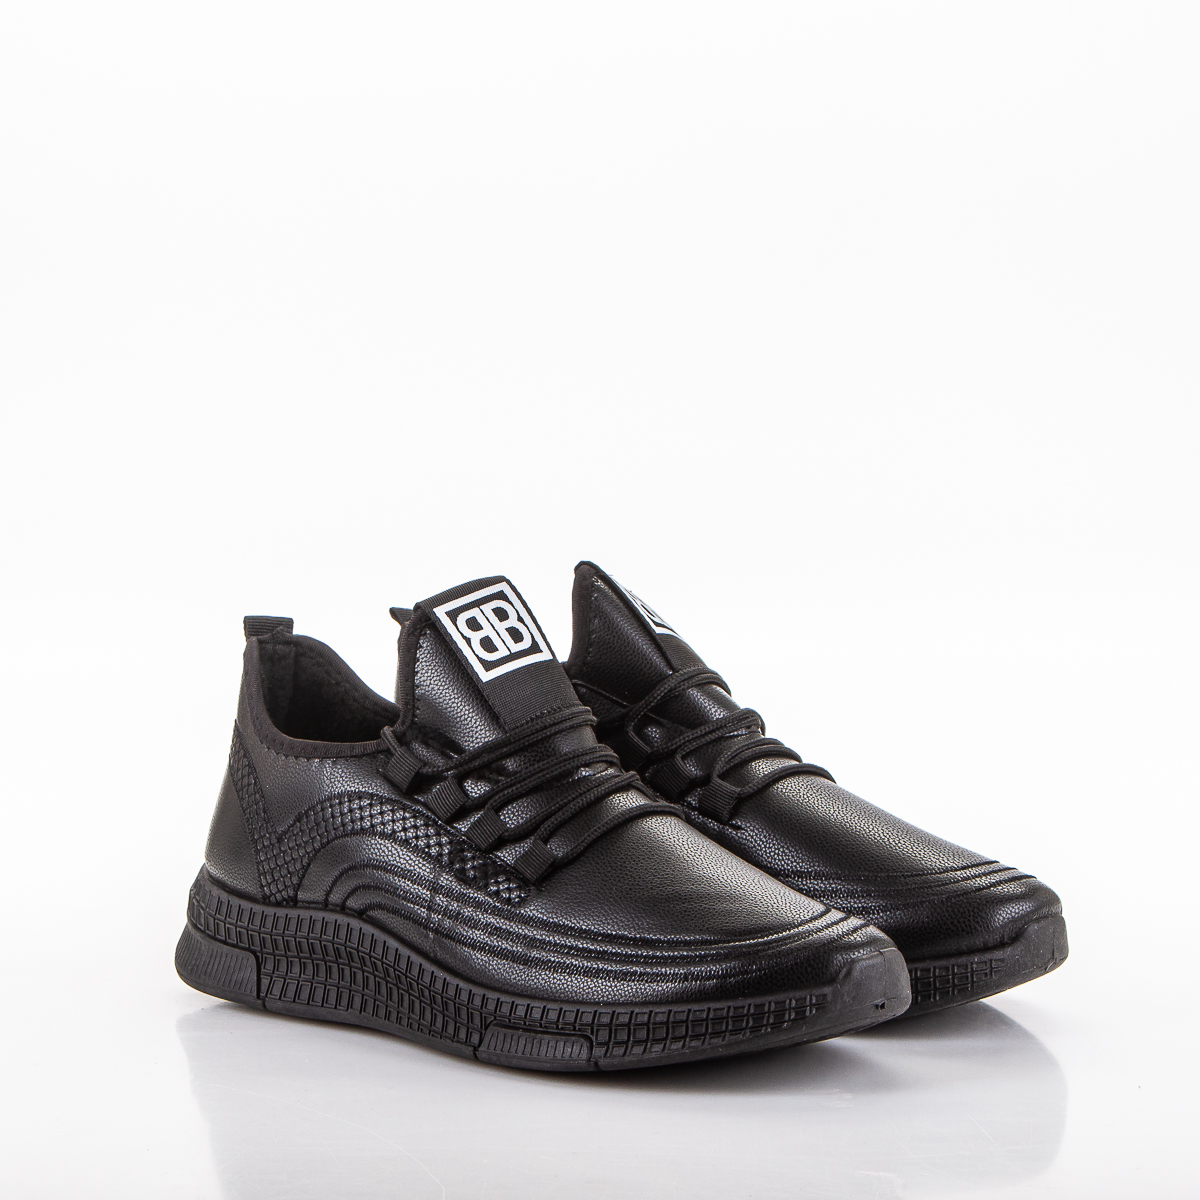 Фото Кроcсовки мужские J02 black купить на lauf.shoes